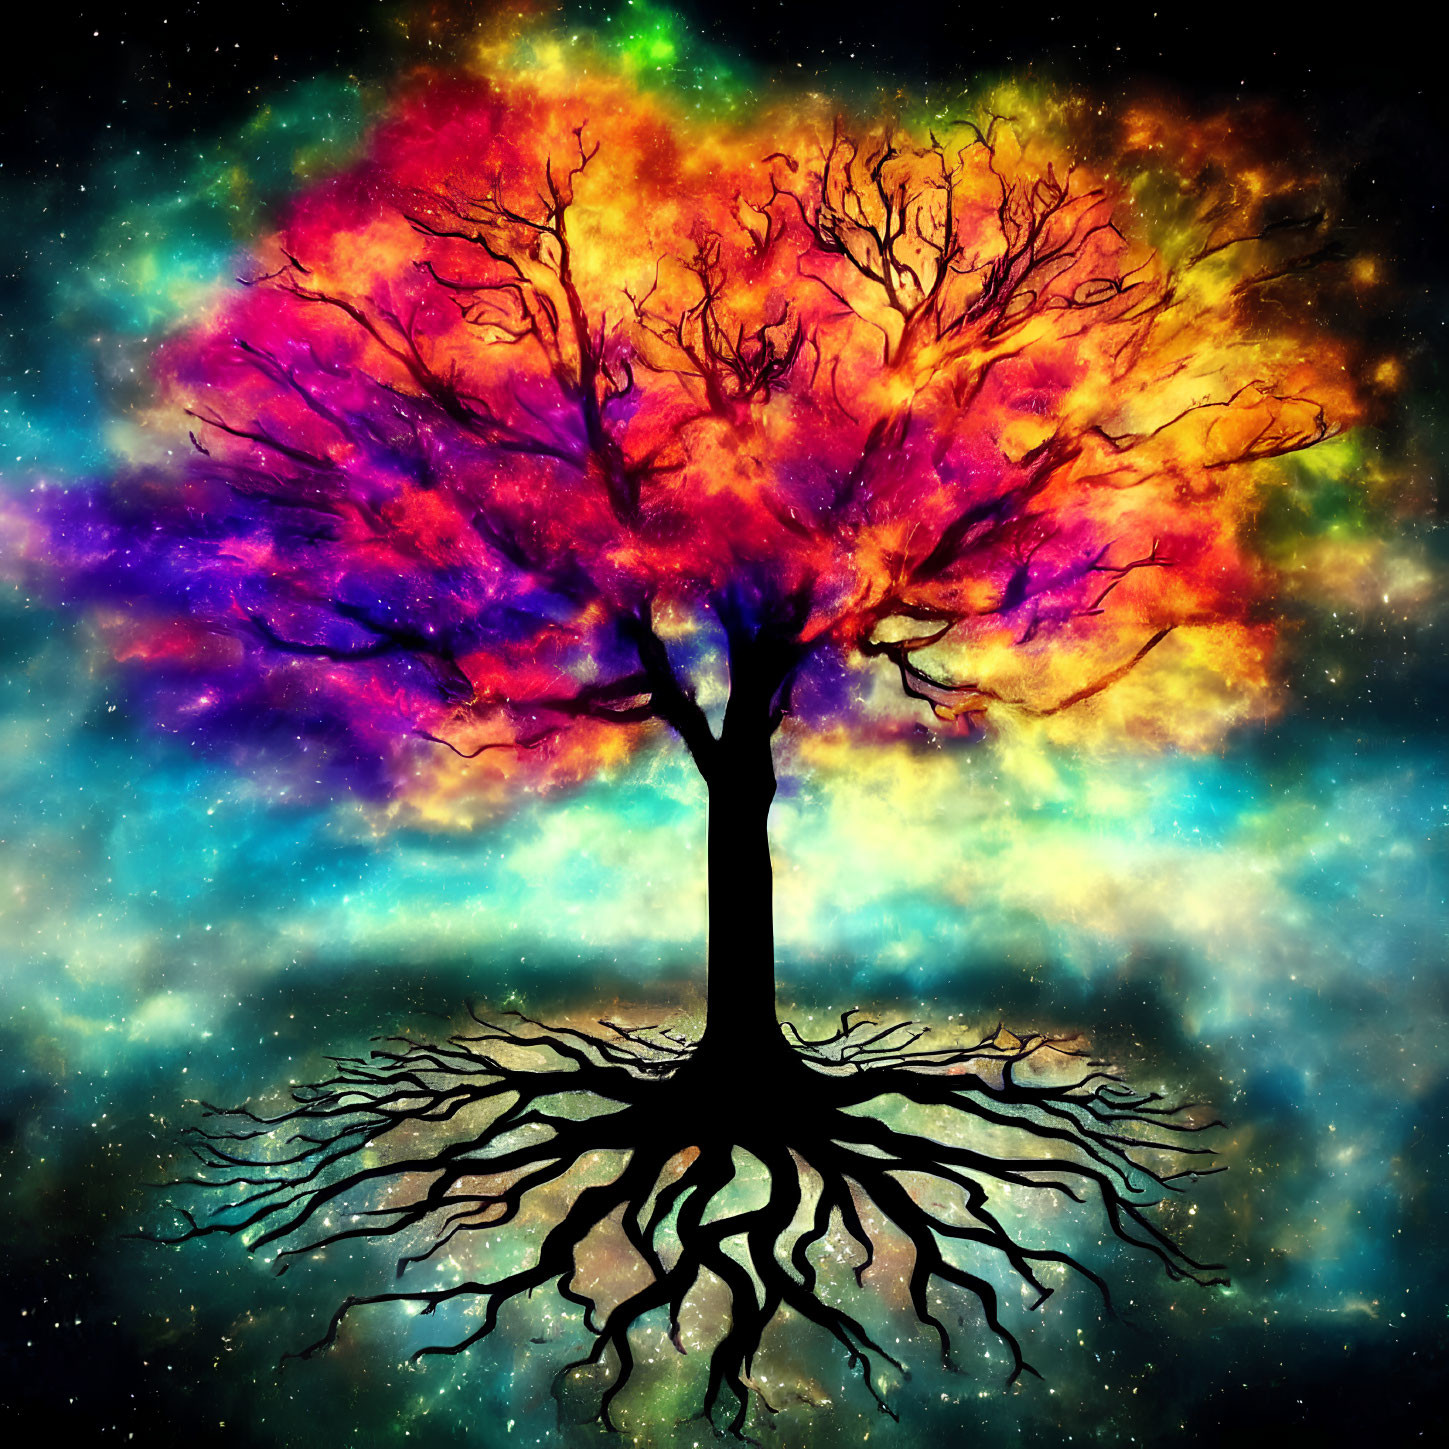 Colorful Nebula-Like Tree in Cosmic Setting